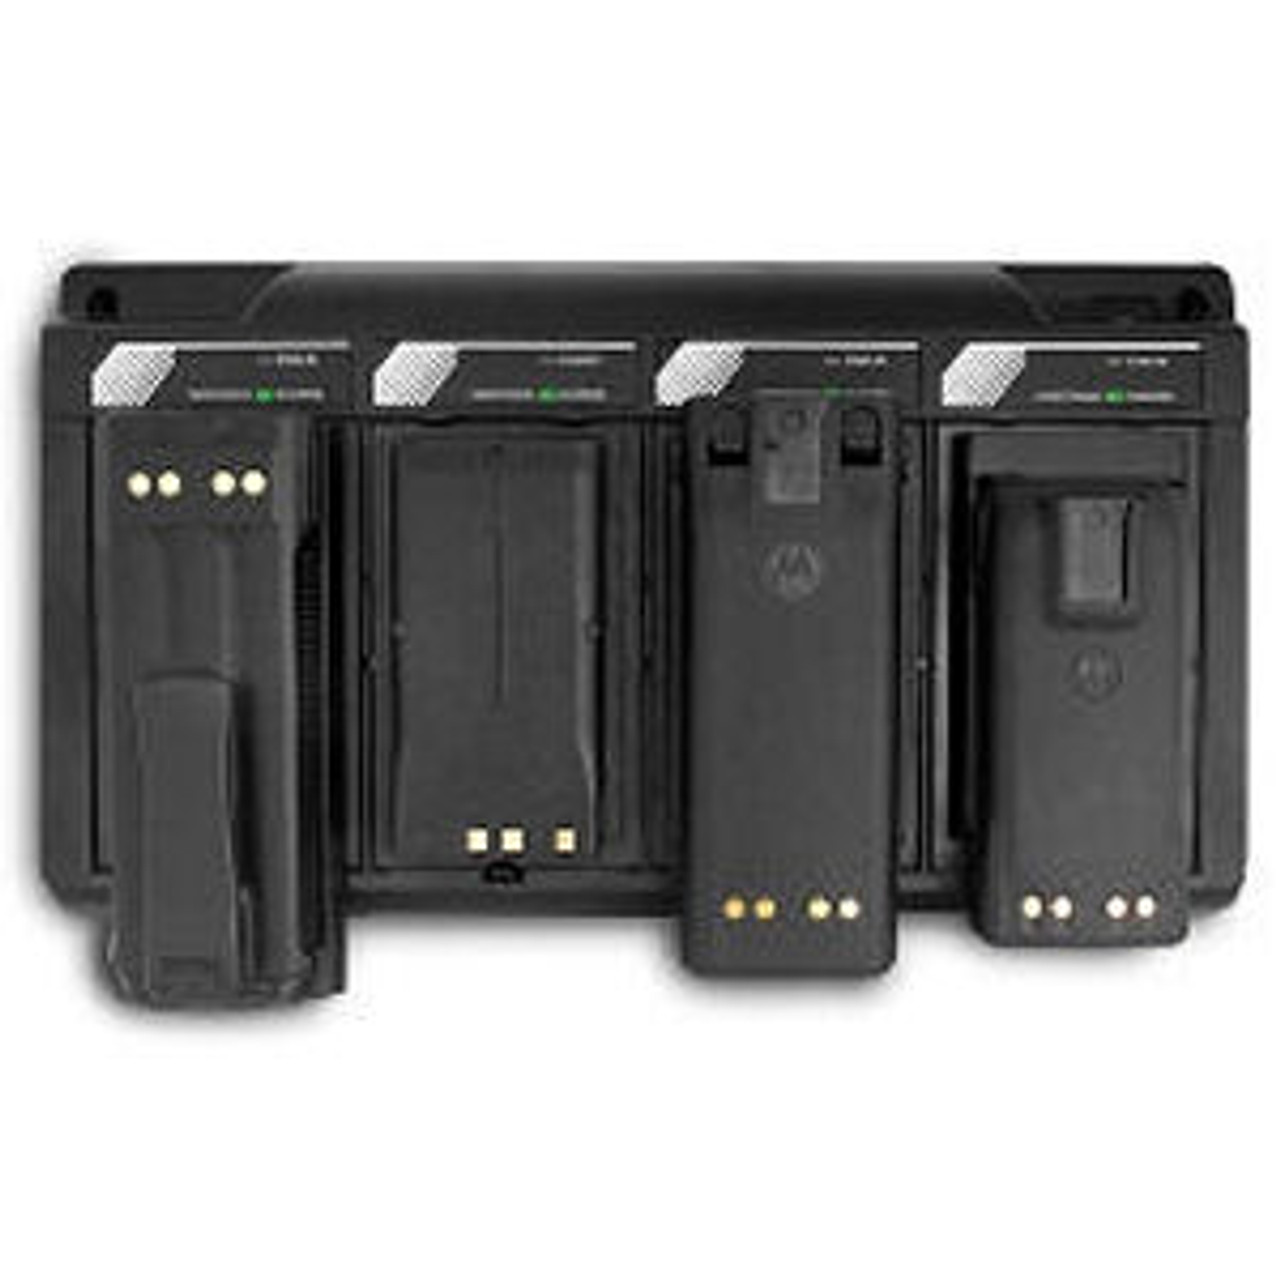 AdvanceTec 4-Slot Conditioning Charger For Harris XG-75 Lithium Batteries